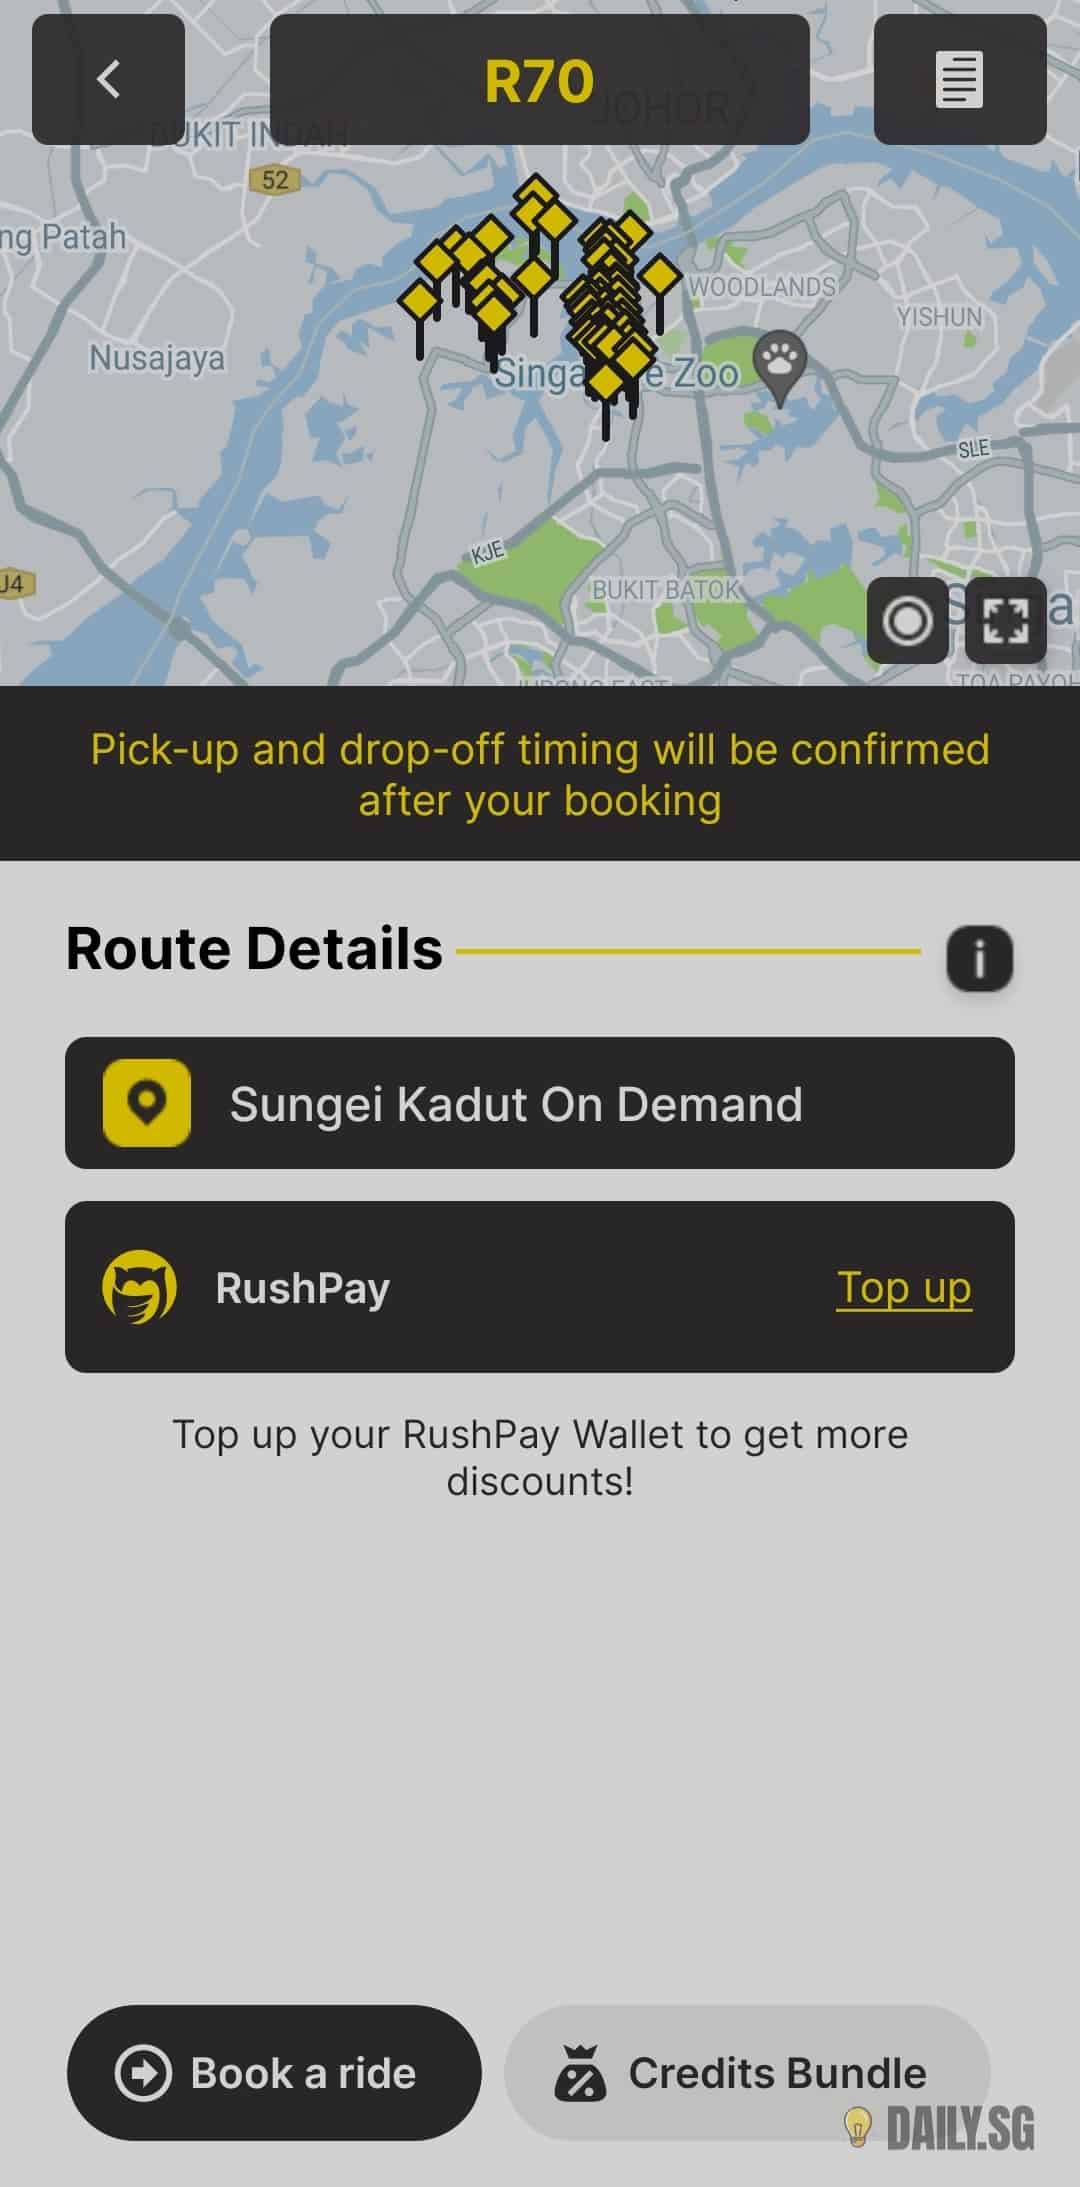 RushTrail - 第 6 步 预订行程